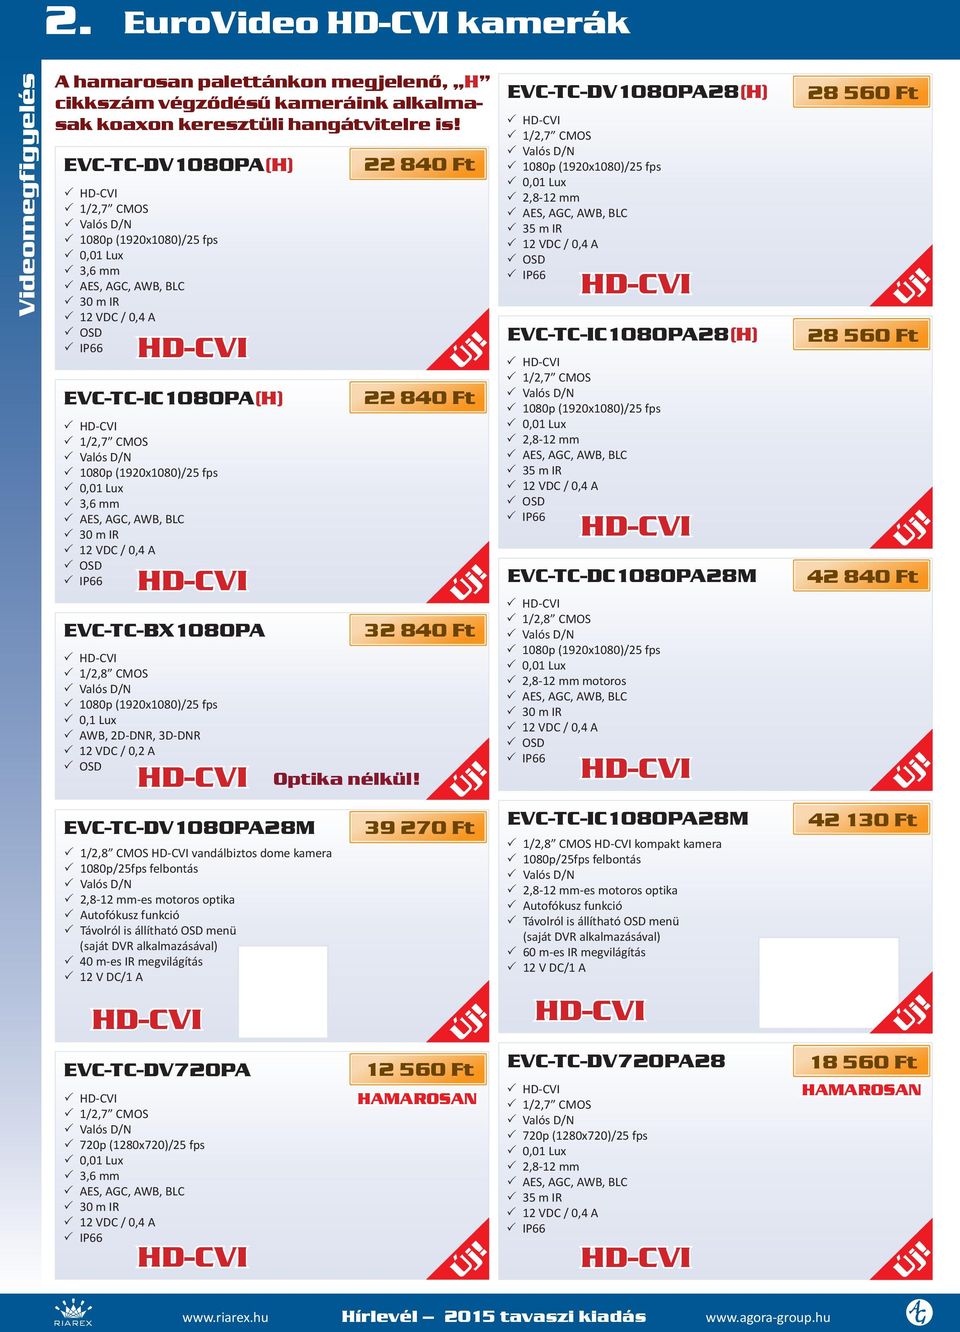 HD-CVI 33 1/,7 CMOS 33 Valós D/N 33 1080p (190x1080)/5 fps 33 0,01 Lux 33 3,6 33 AES, AGC, AWB, BLC 33 30 m IR 33 1 VDC / 0,4 A 33 OSD 33 IP66 HD-CVI EVC-TC-BX1080PA 33 HD-CVI 33 1/,8 CMOS 33 Valós